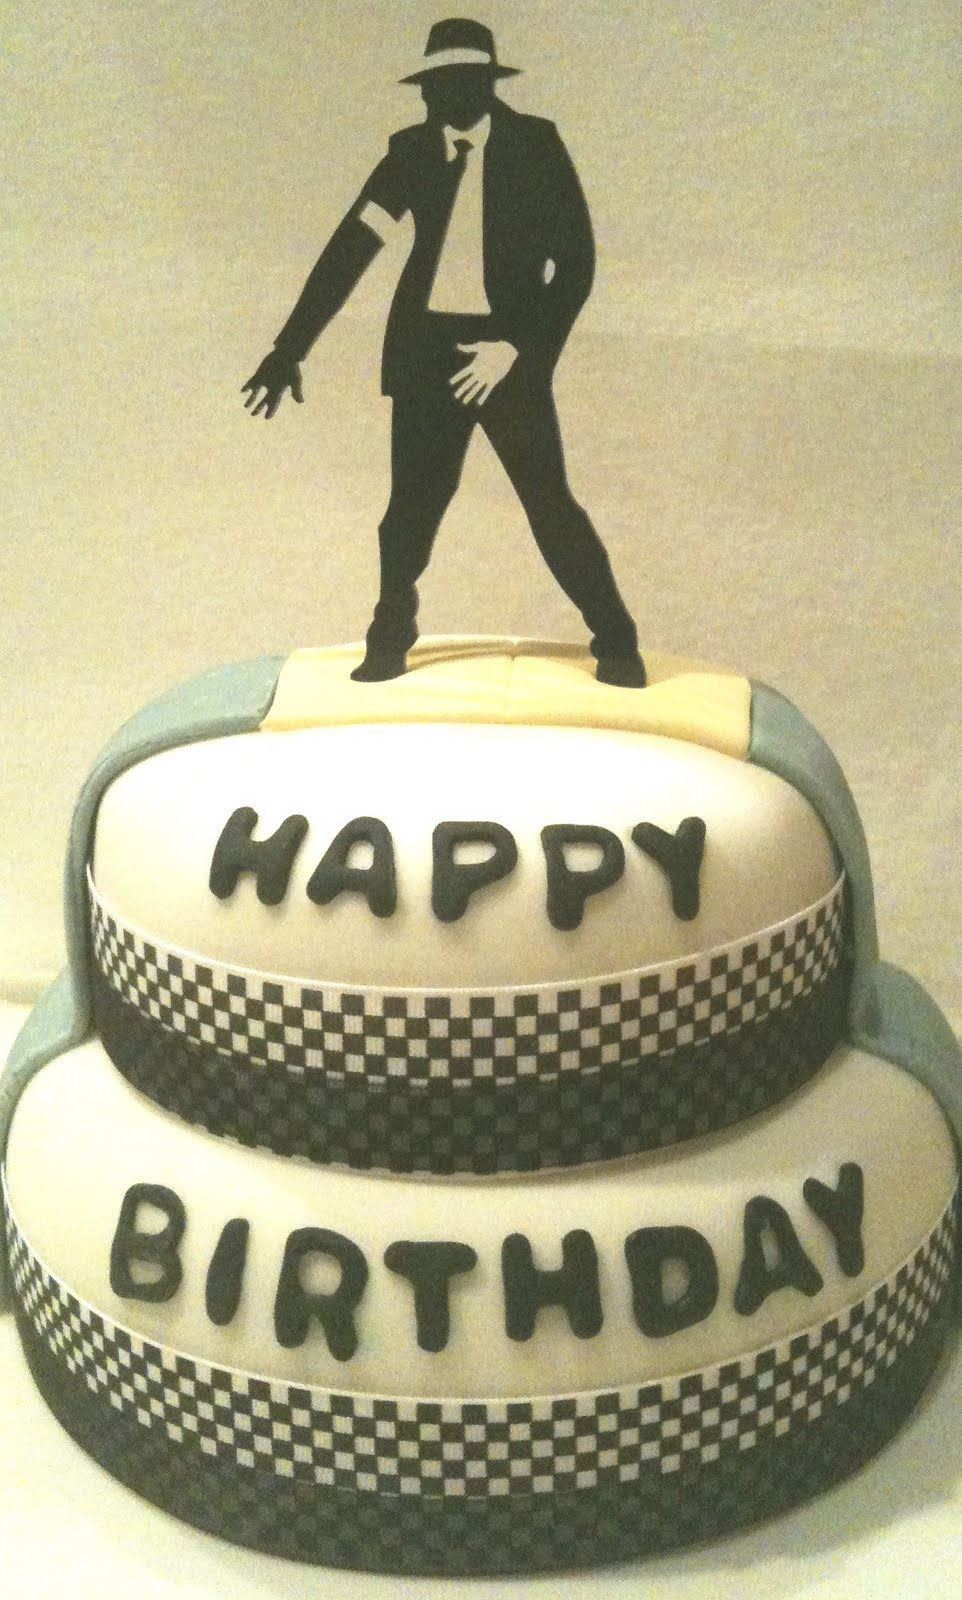 I Design: Michael Jackson cake!